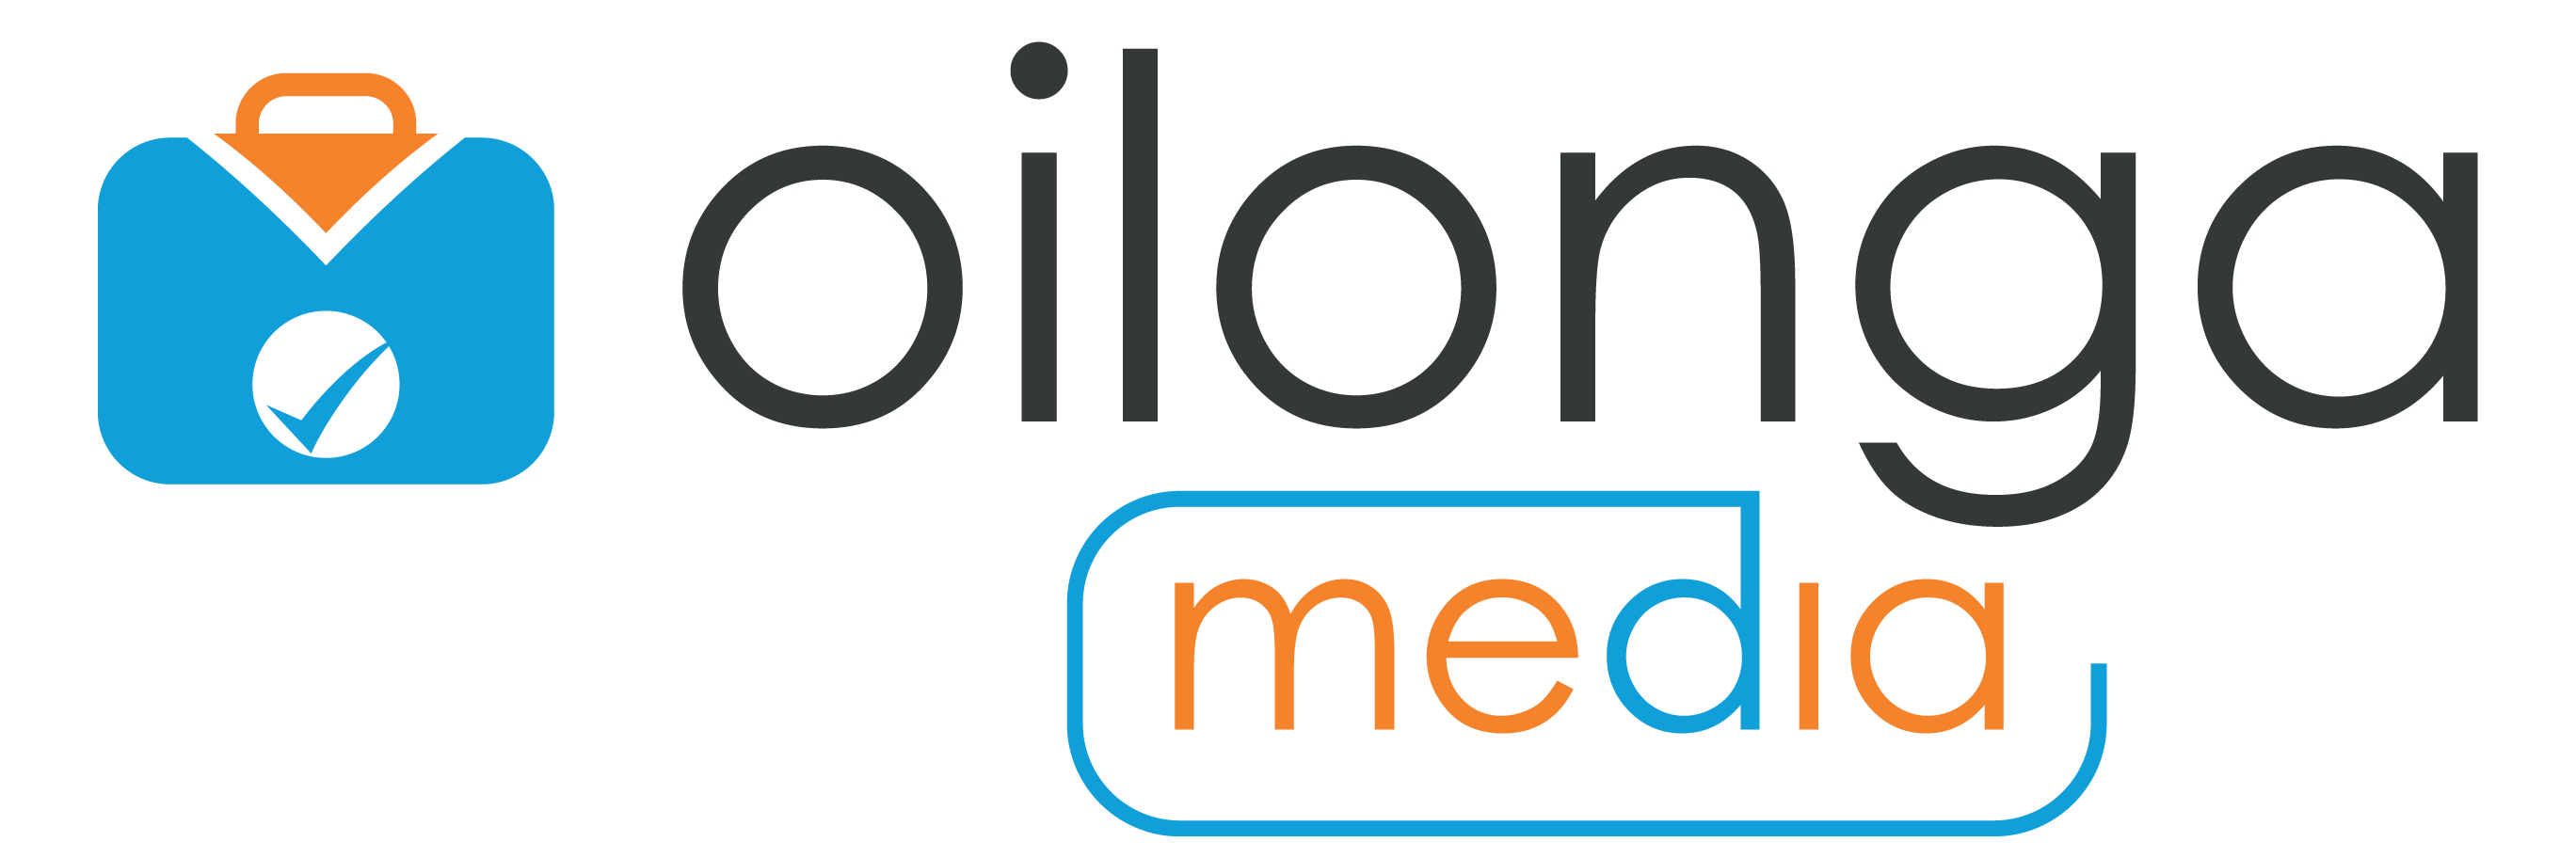 Oilonga Media Digital Services